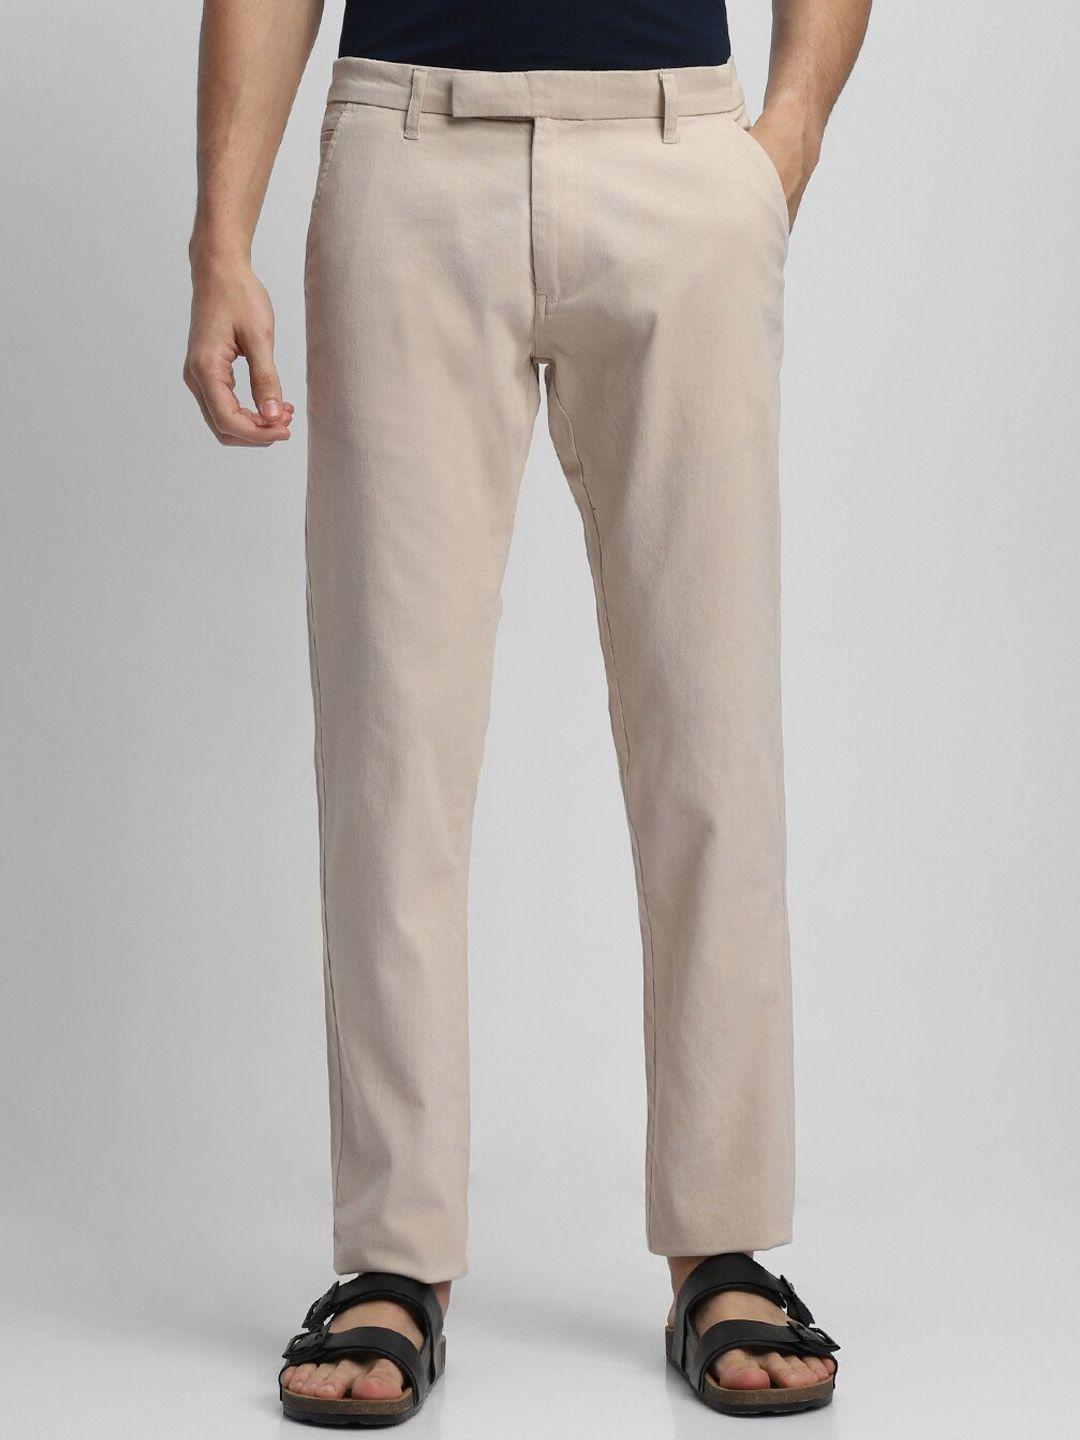 dennis-lingo-men-slim-fit-wrinkle-free-chinos-trousers